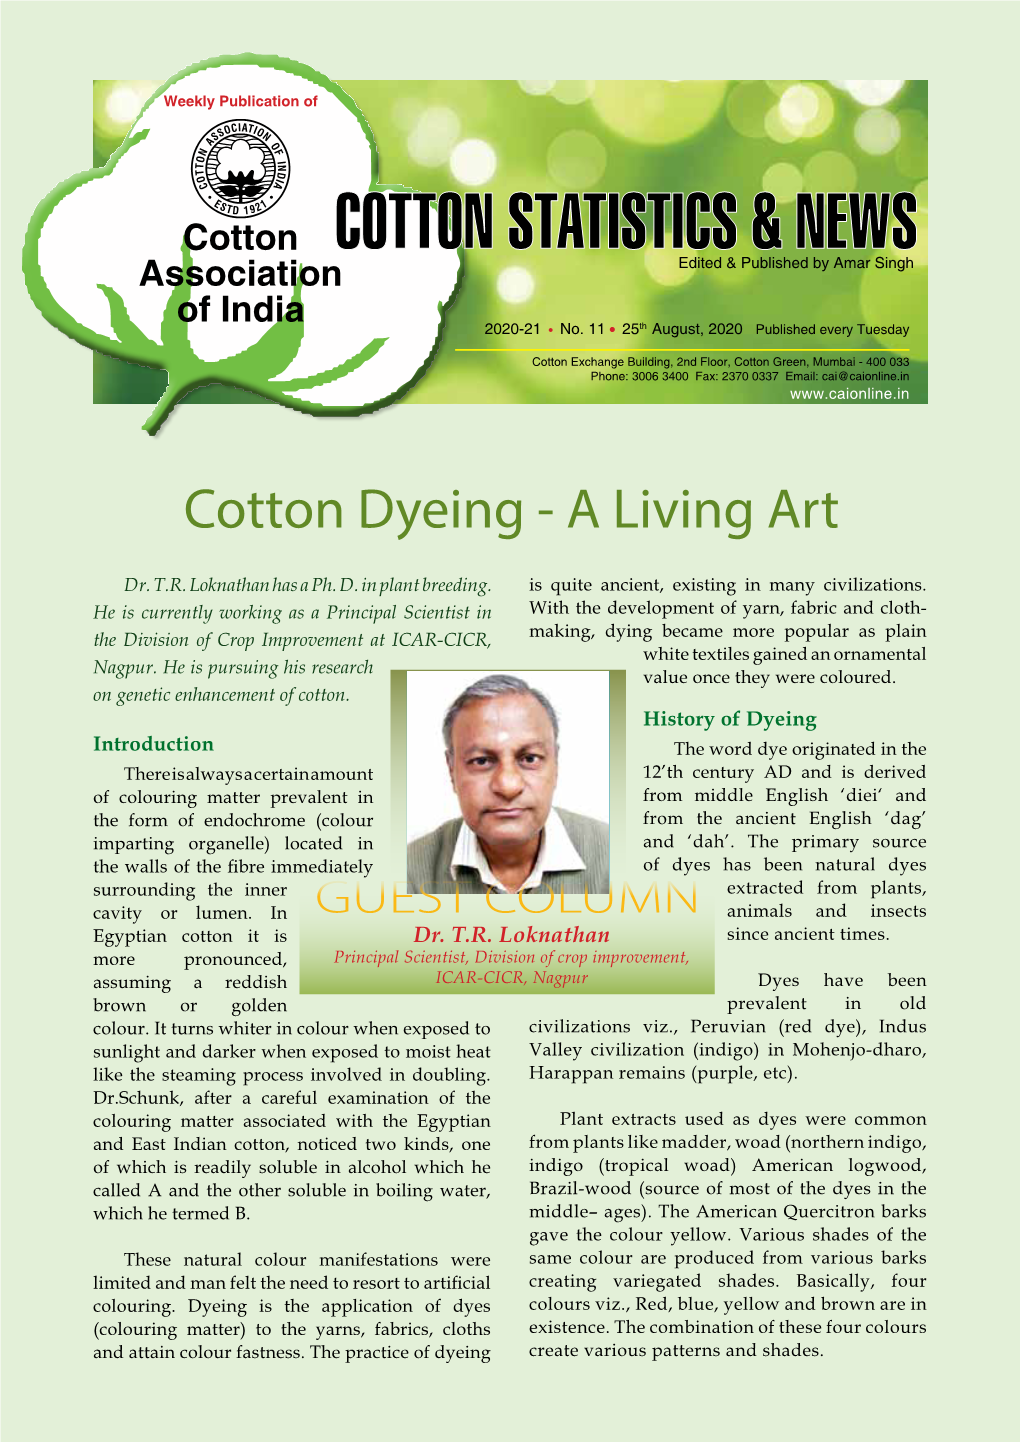 Cotton Dyeing - a Living Art